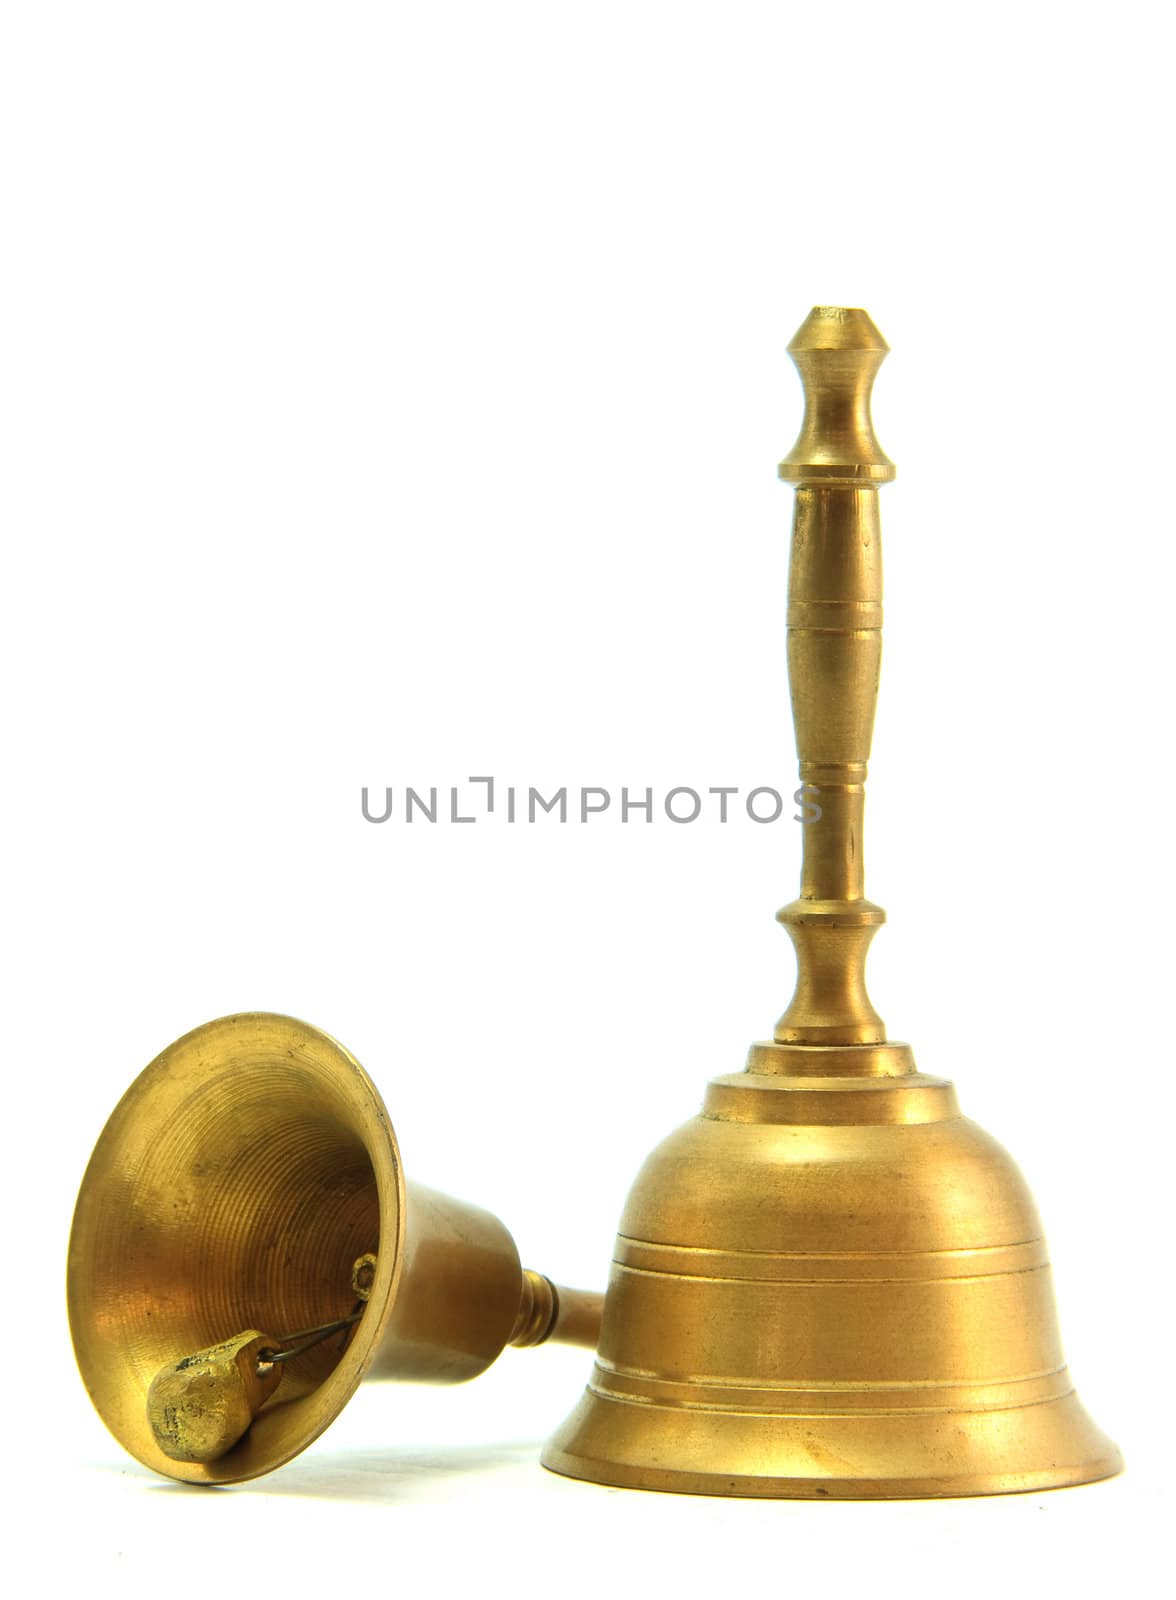 golden hand bell Isolated on White